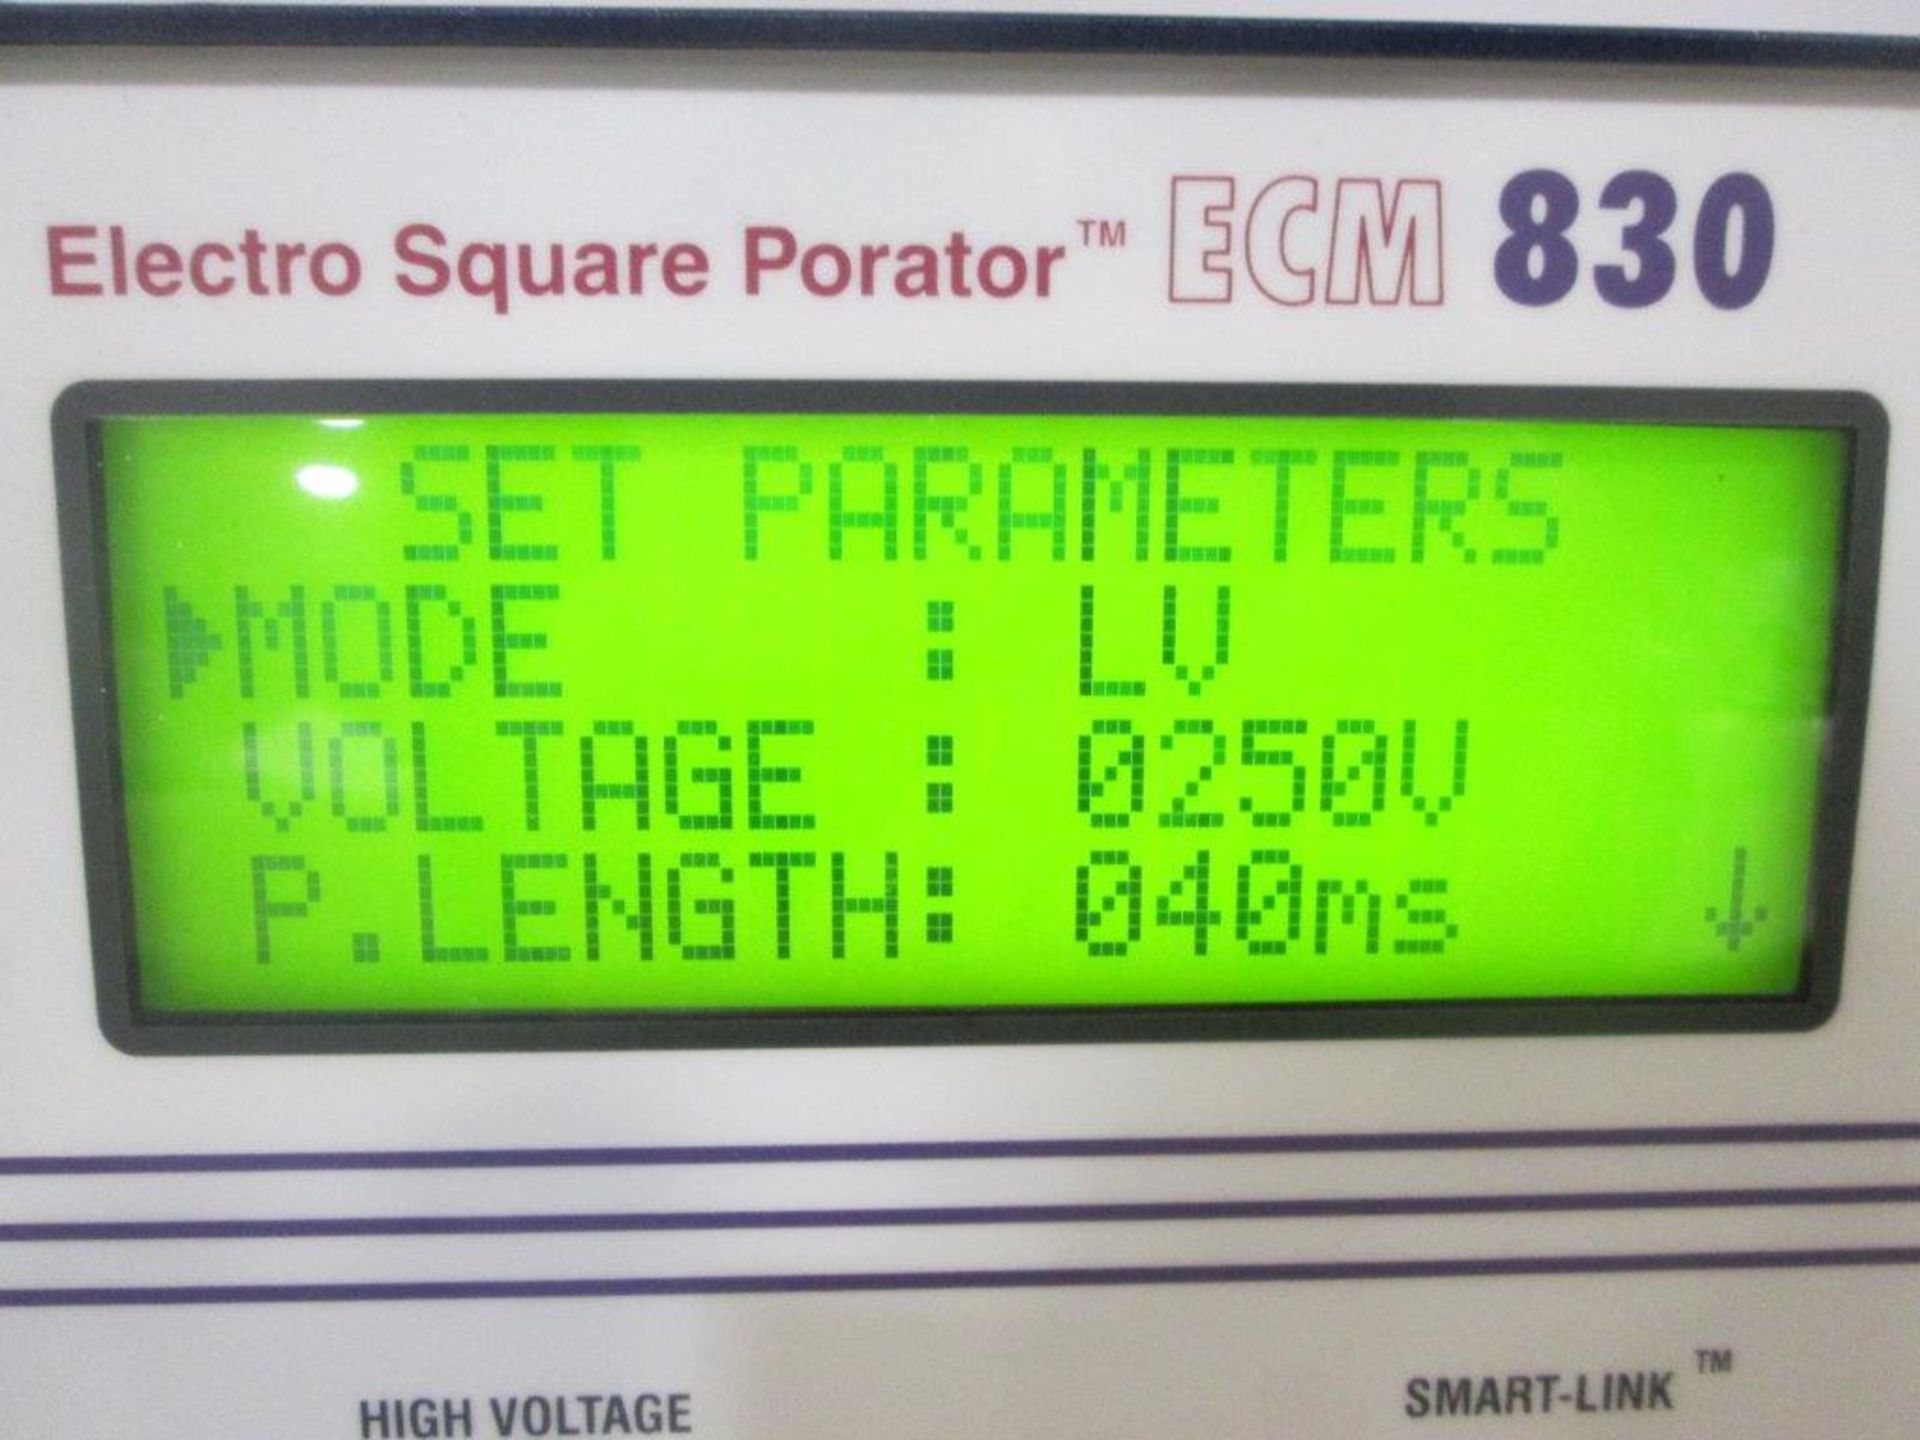 BTX ECM 830 Electro Square Porator - Image 3 of 3